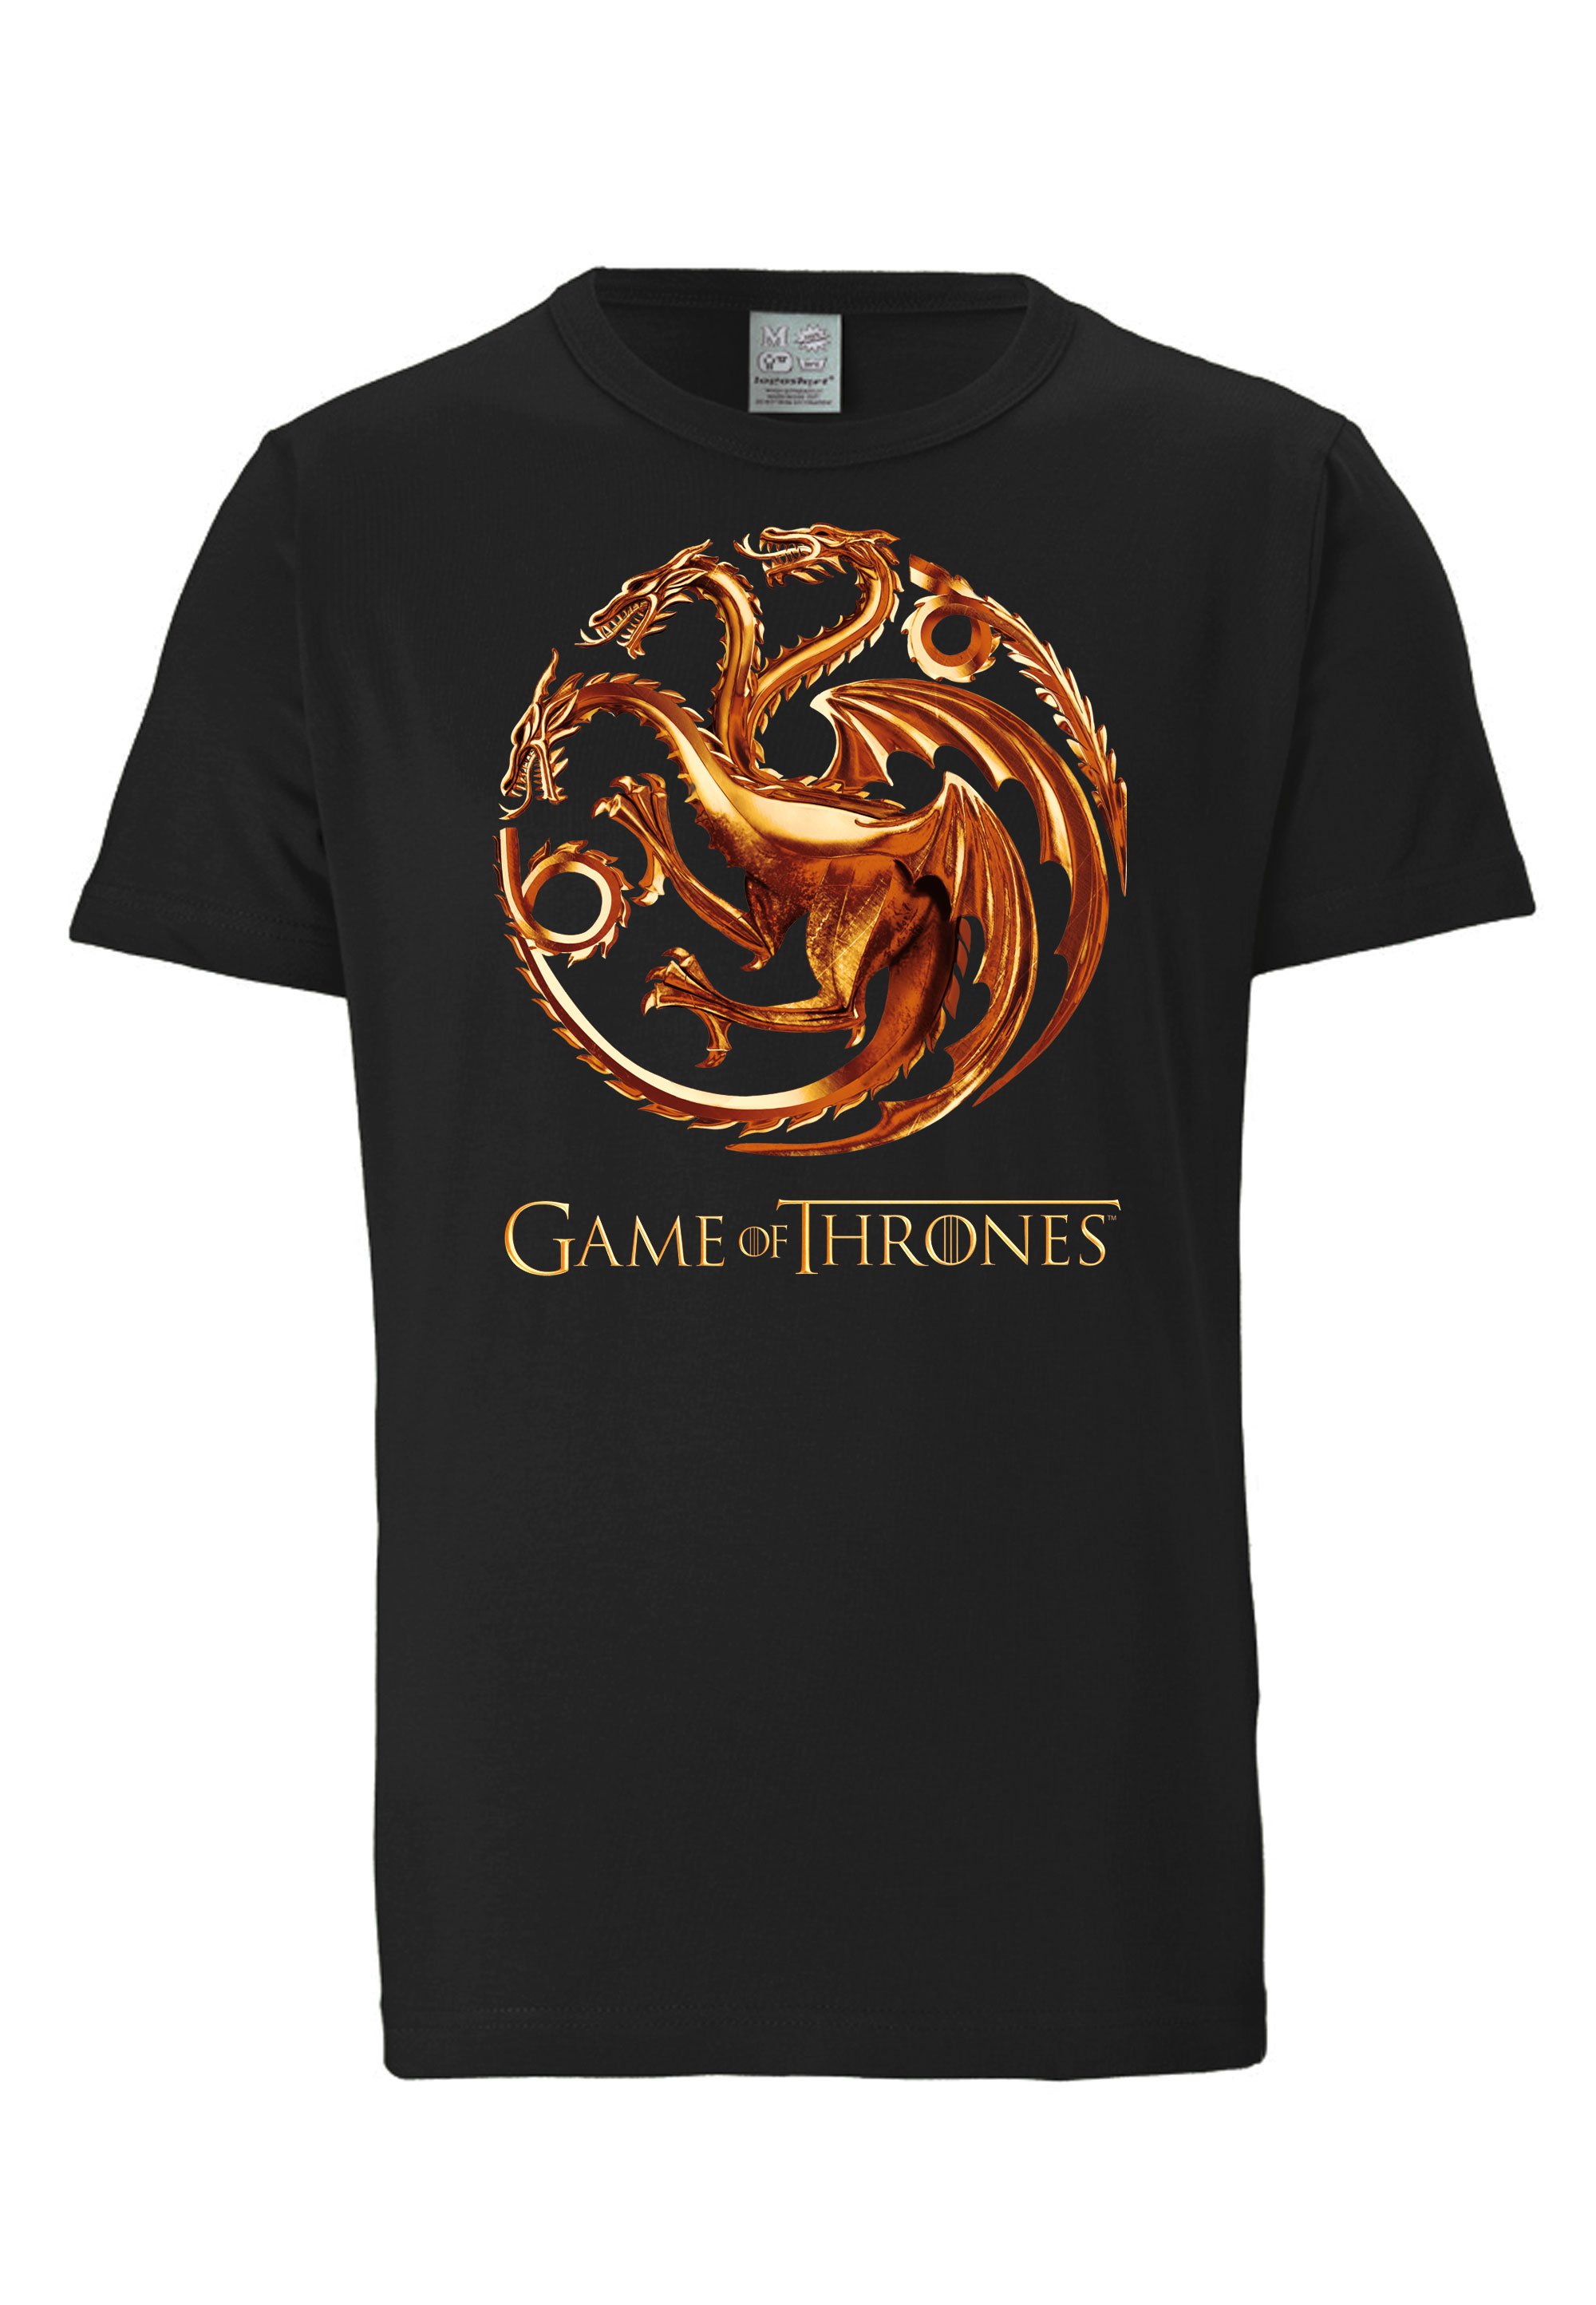 Футболка Logoshirt Game Of Thrones Targaryen, черный daenerys targaryen game of thrones 651563 3xs белый